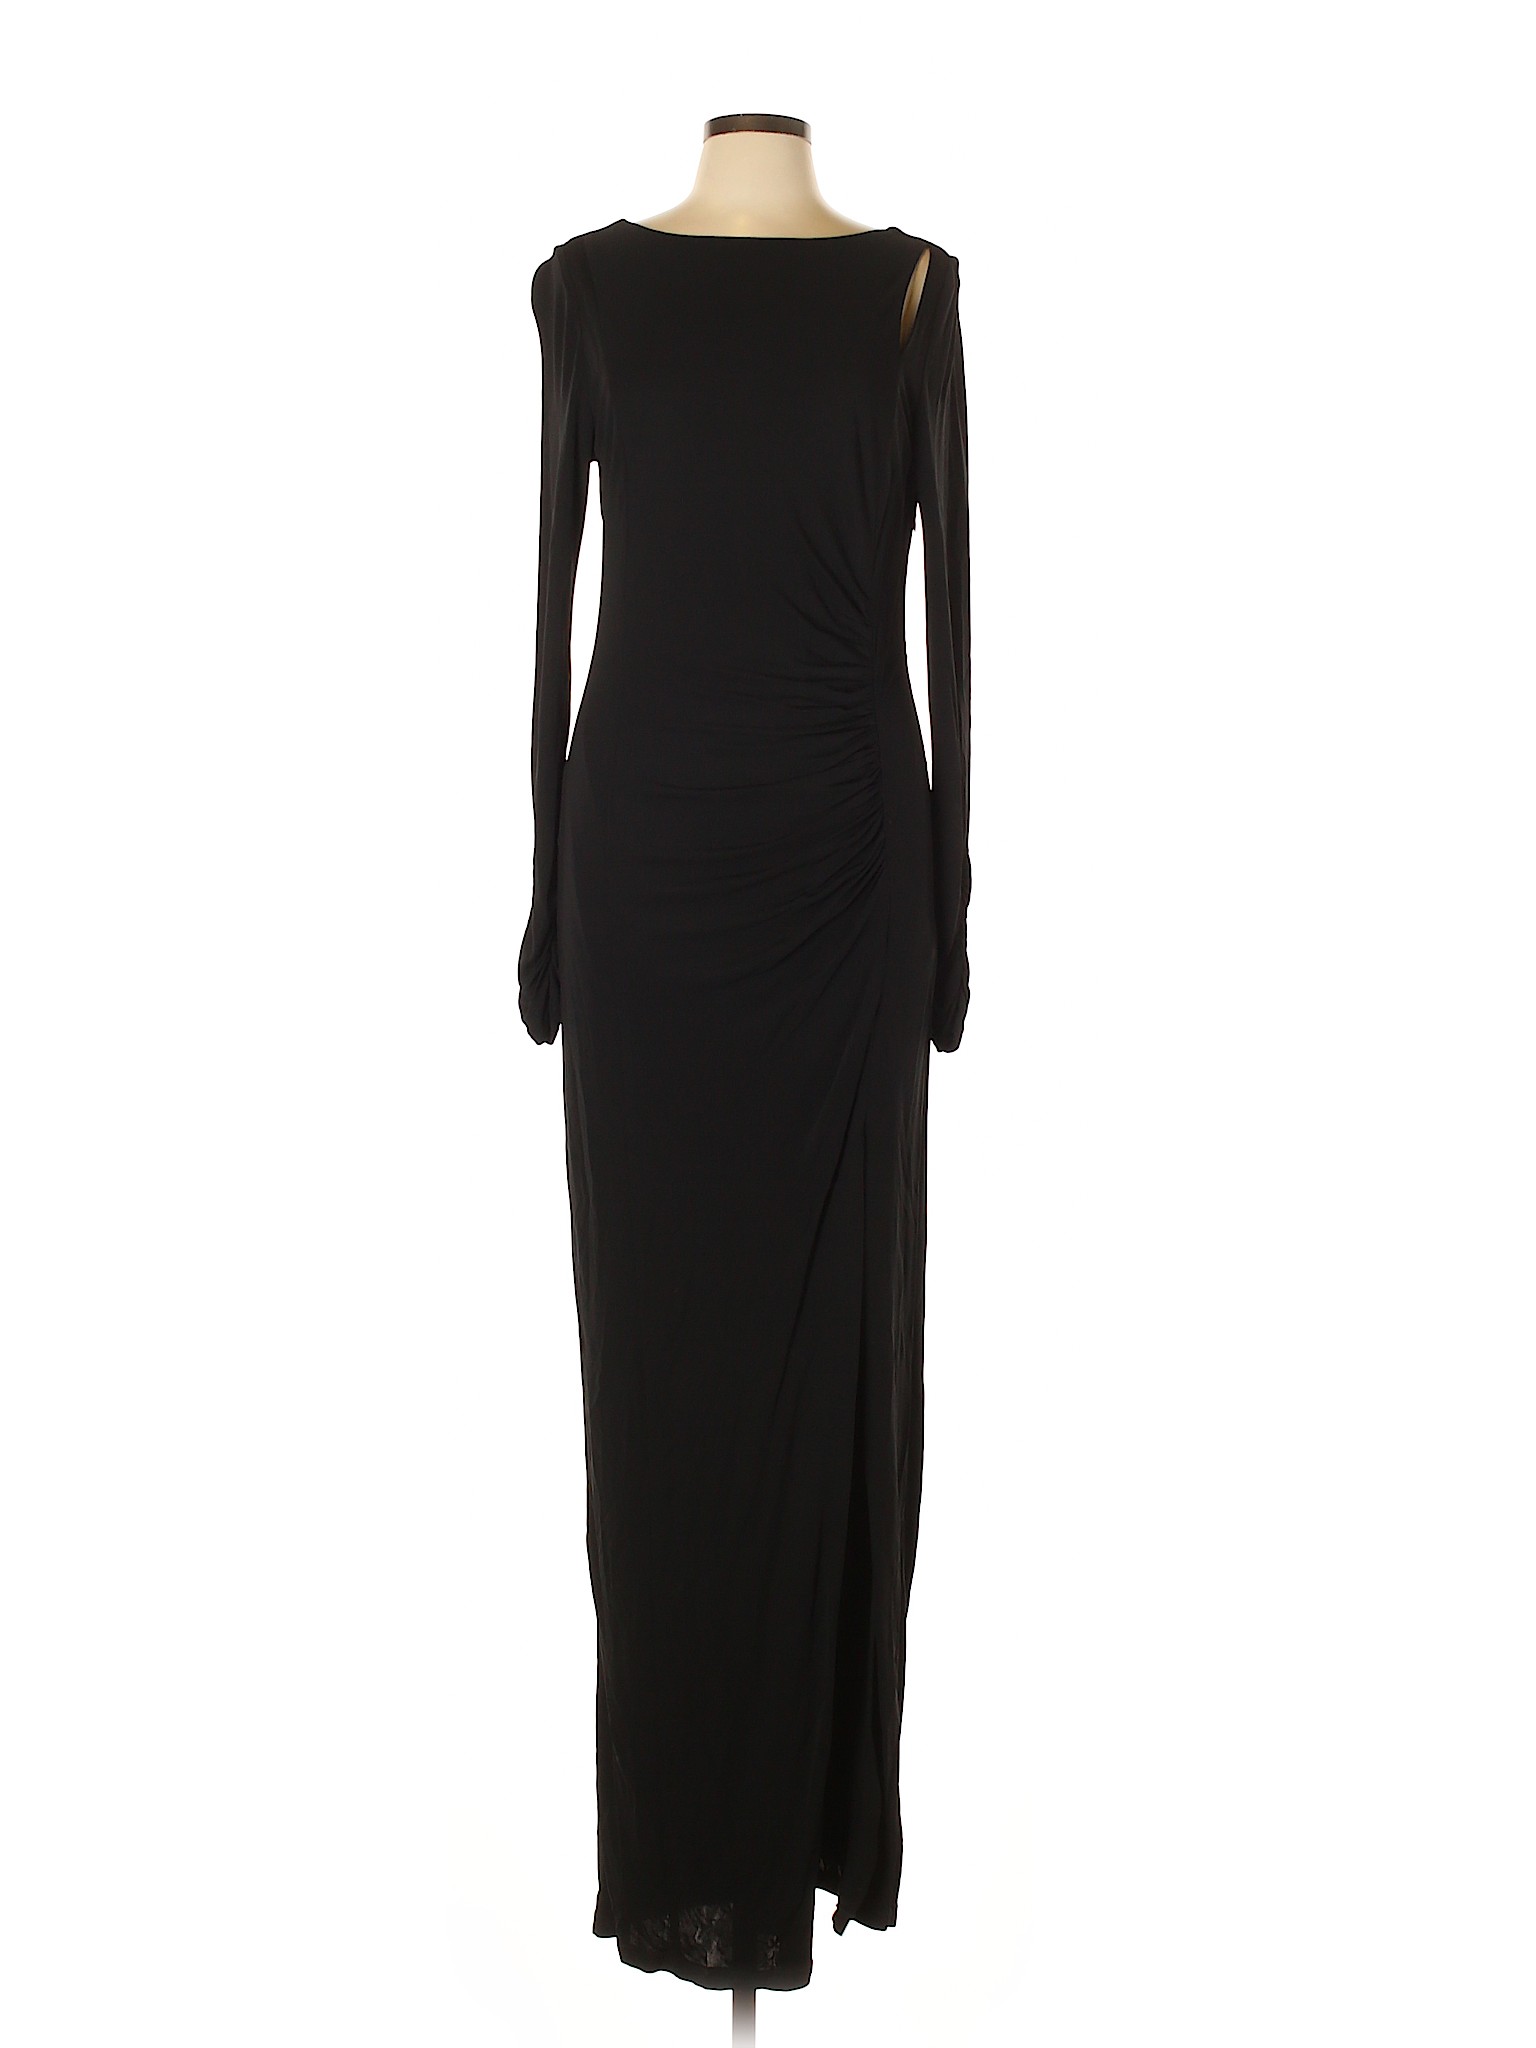 Karen Millen Solid Black Casual Dress Size 12 - 86% off | thredUP